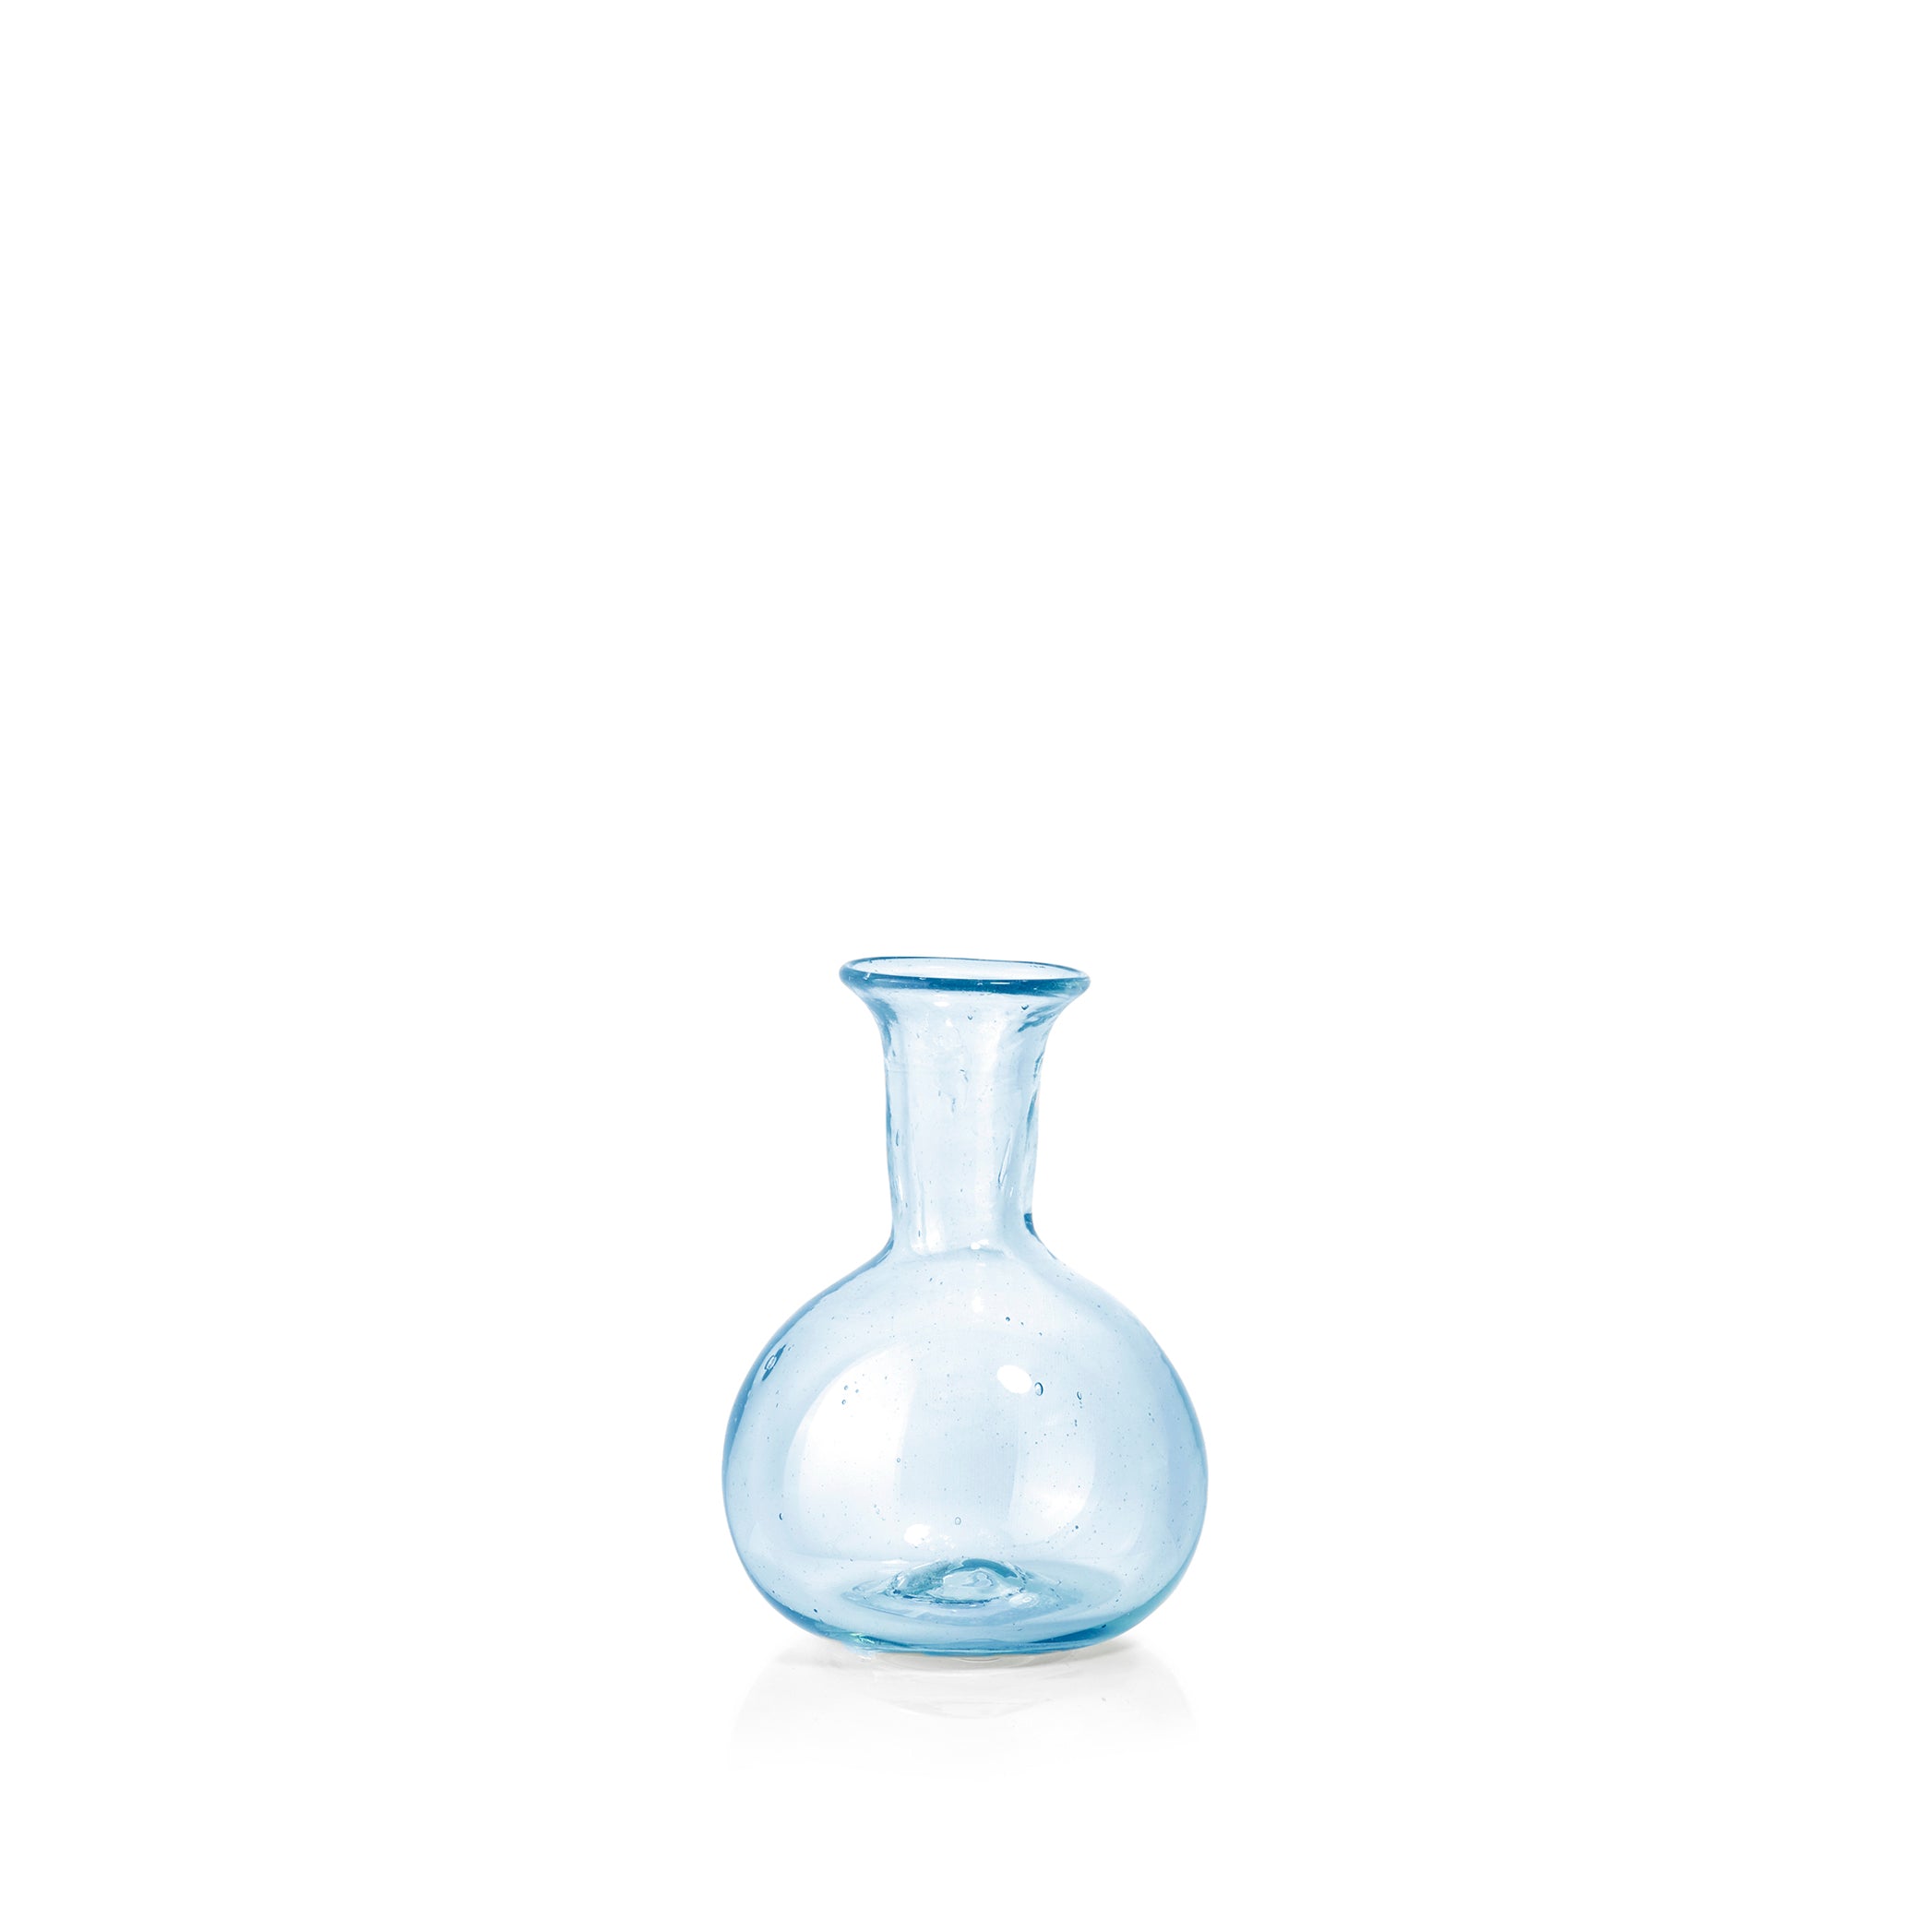 Handblown Small Round Bud Vase in Turquoise Blue, 9cm